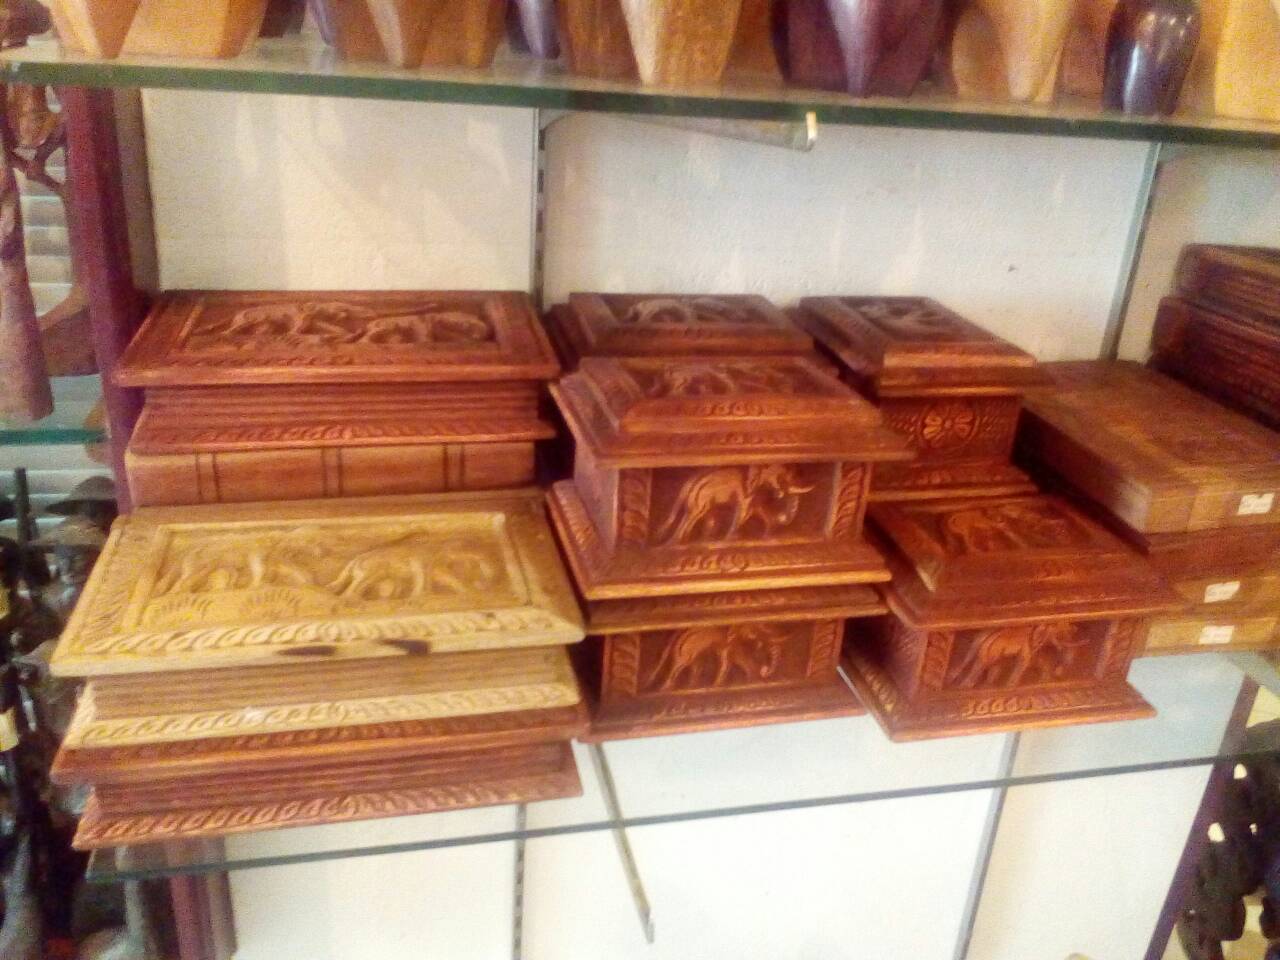 Boxes with secret, Sri Lanka